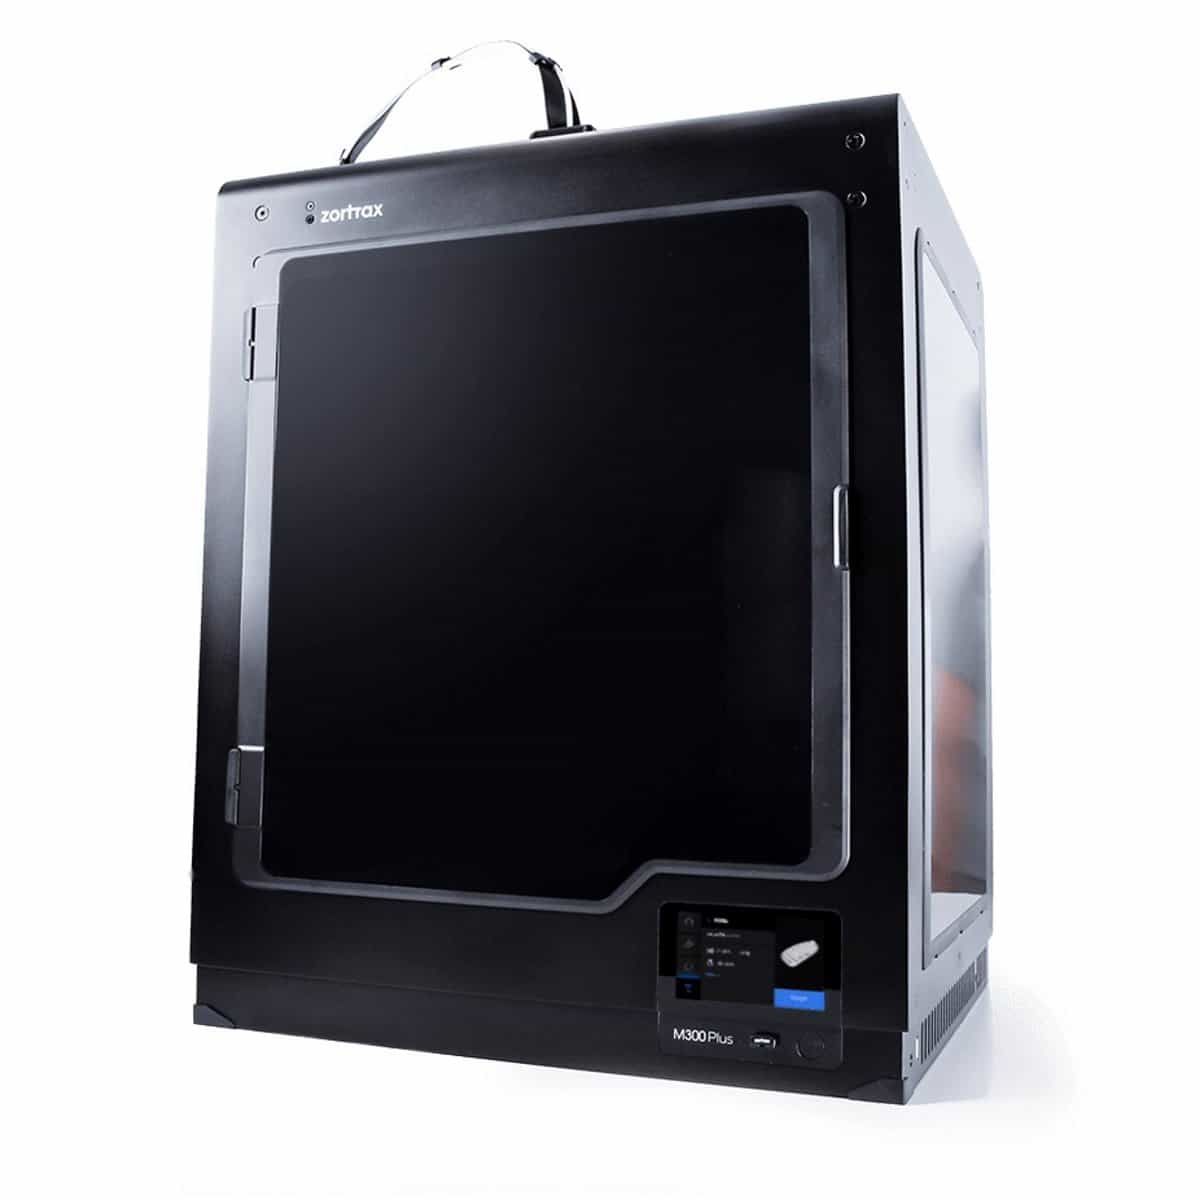 Køb Zortrax M300 Plus 3d printer - Pris 33599.00 kr.